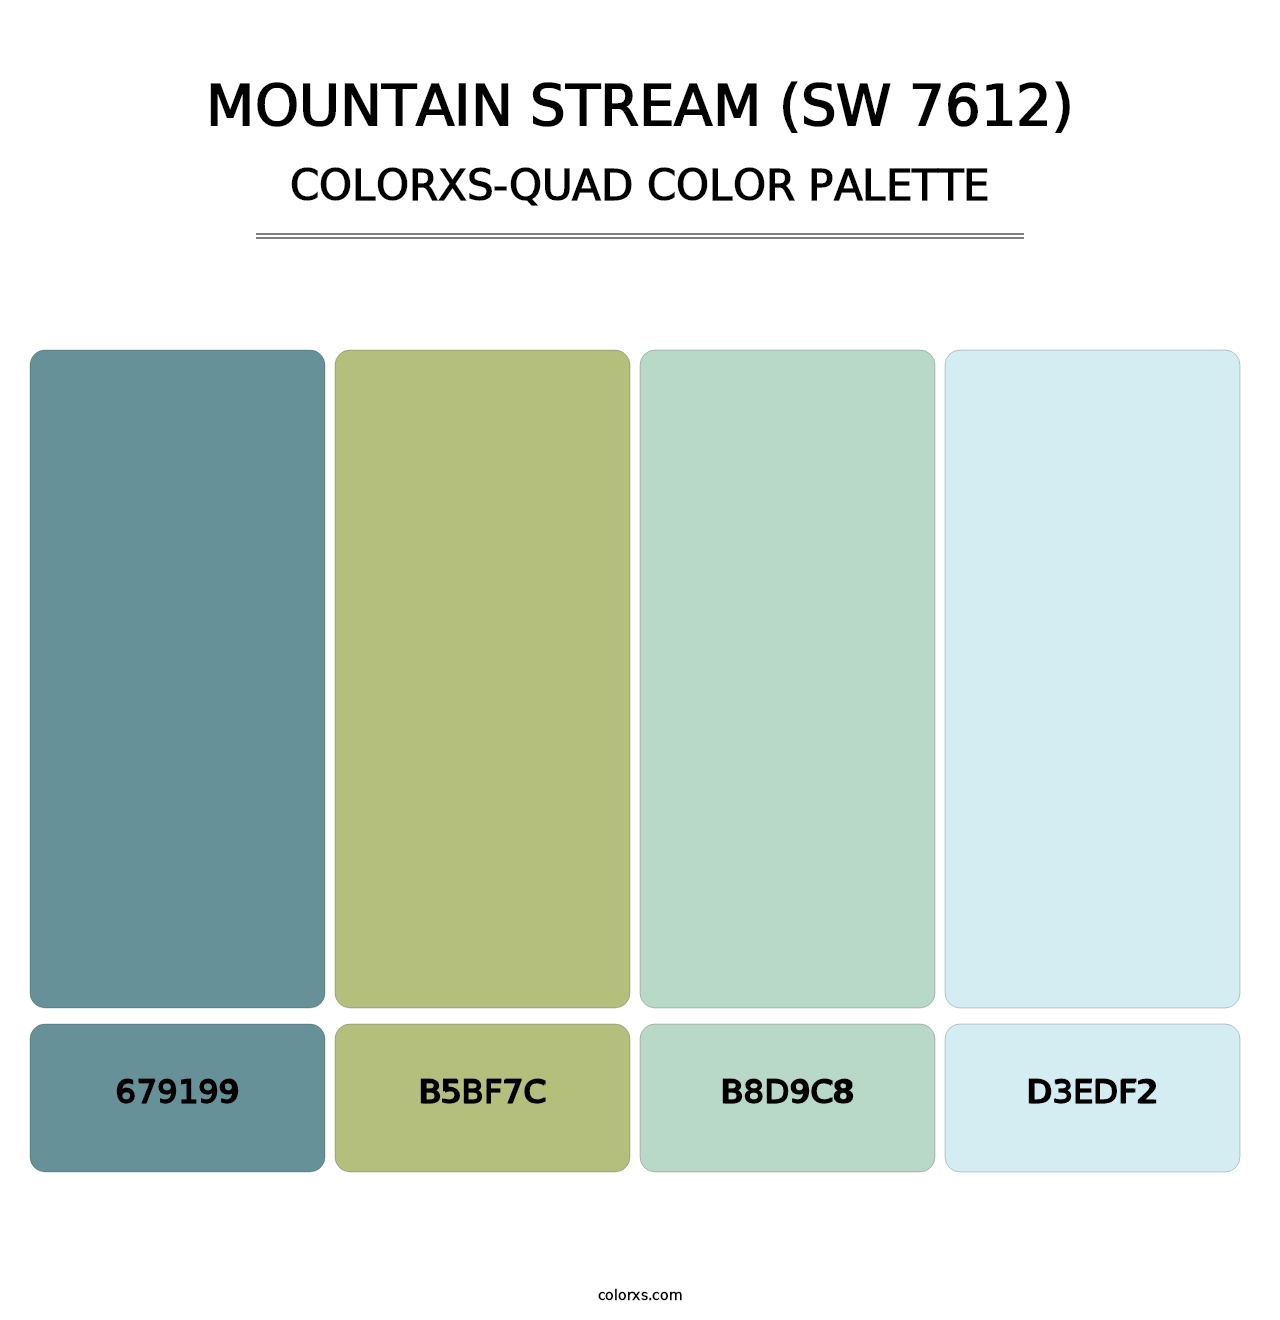 Mountain Stream (SW 7612) - Colorxs Quad Palette